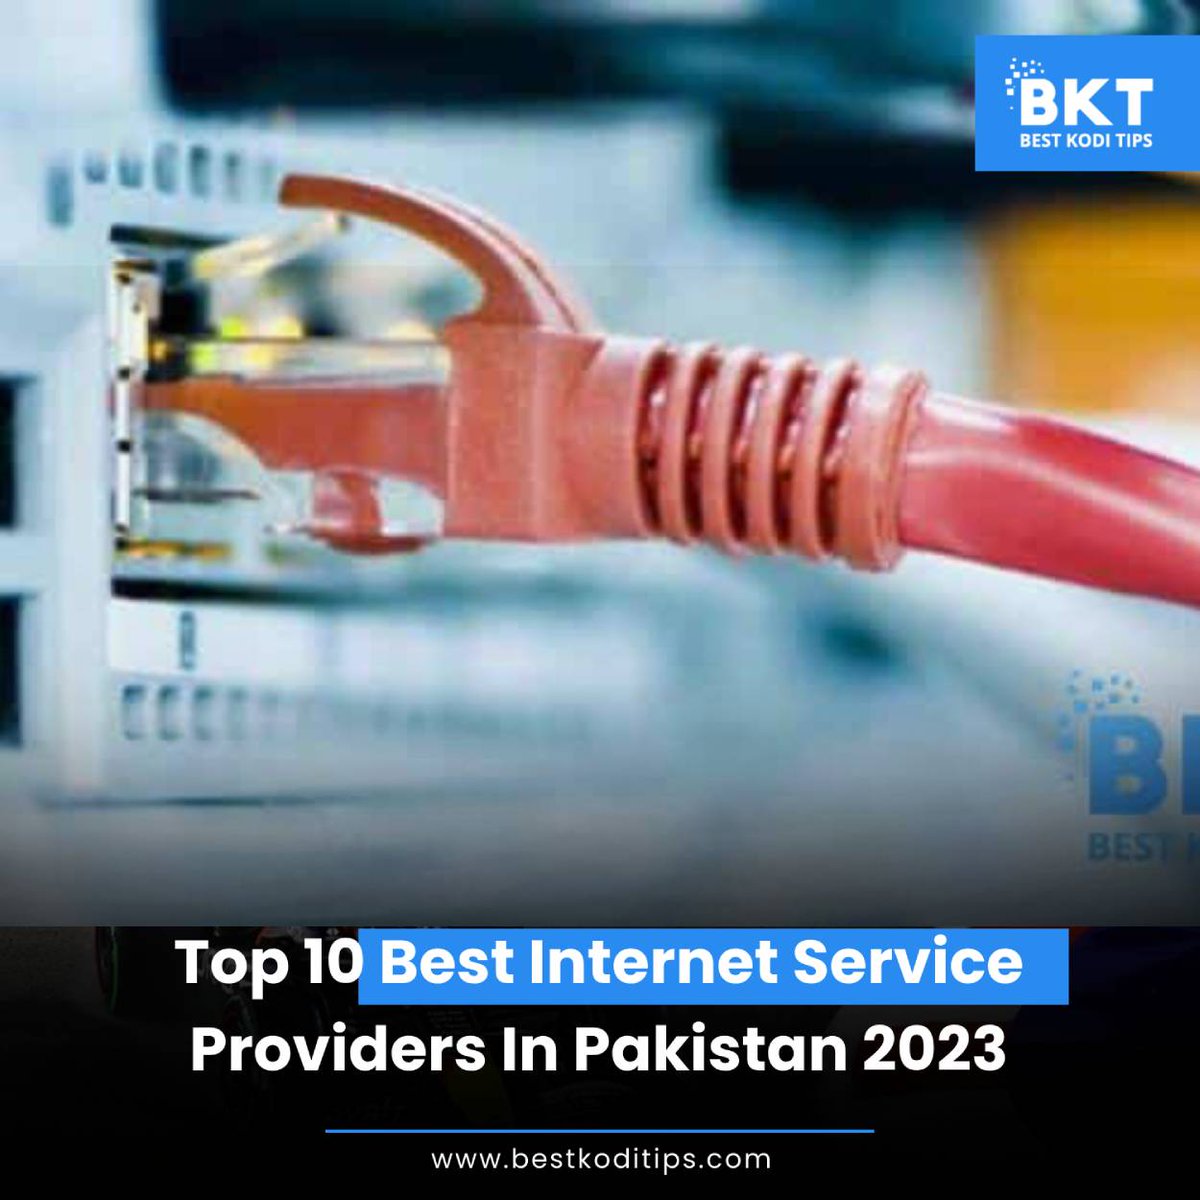 Top 10 Best Internet Service Providers in Pakistan 2023
#Regional #Review #tech #TopX #internetservice #Providers #Pakistan #In2023 #blog #BKT #bestkoditipsblog #viralvideo #TheGameAwards #JUIReliefWorkInGaza 
bit.ly/45Ph54E